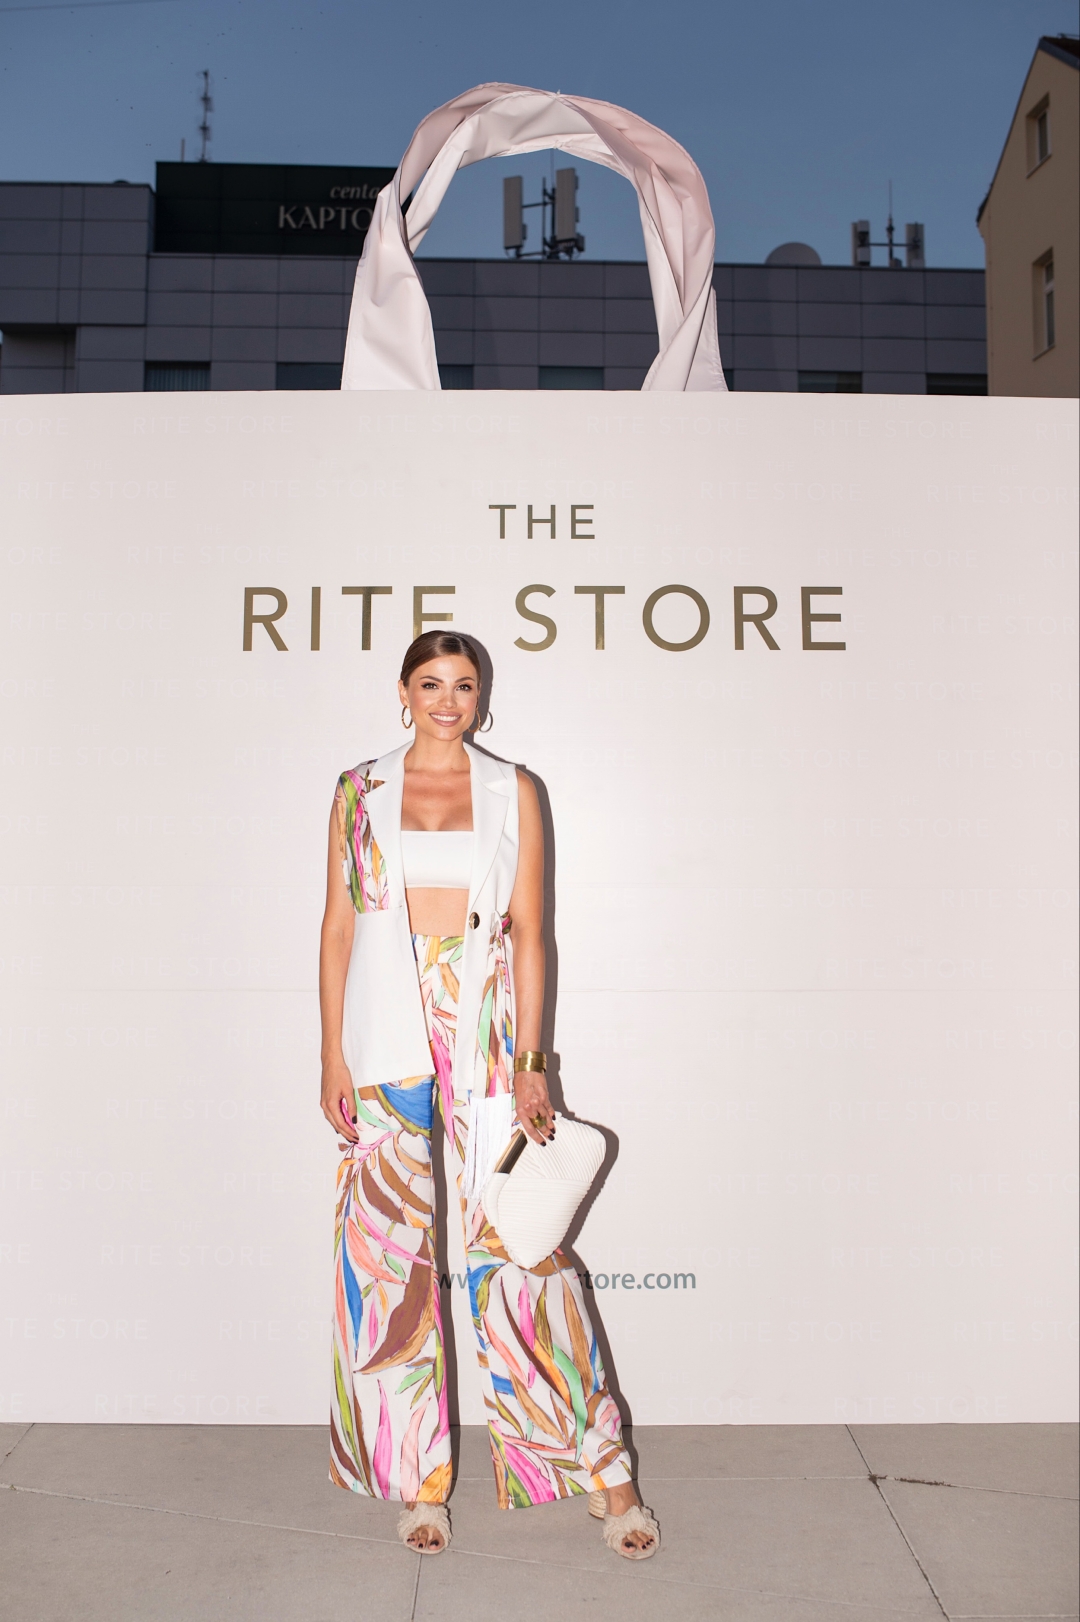 The Rite store